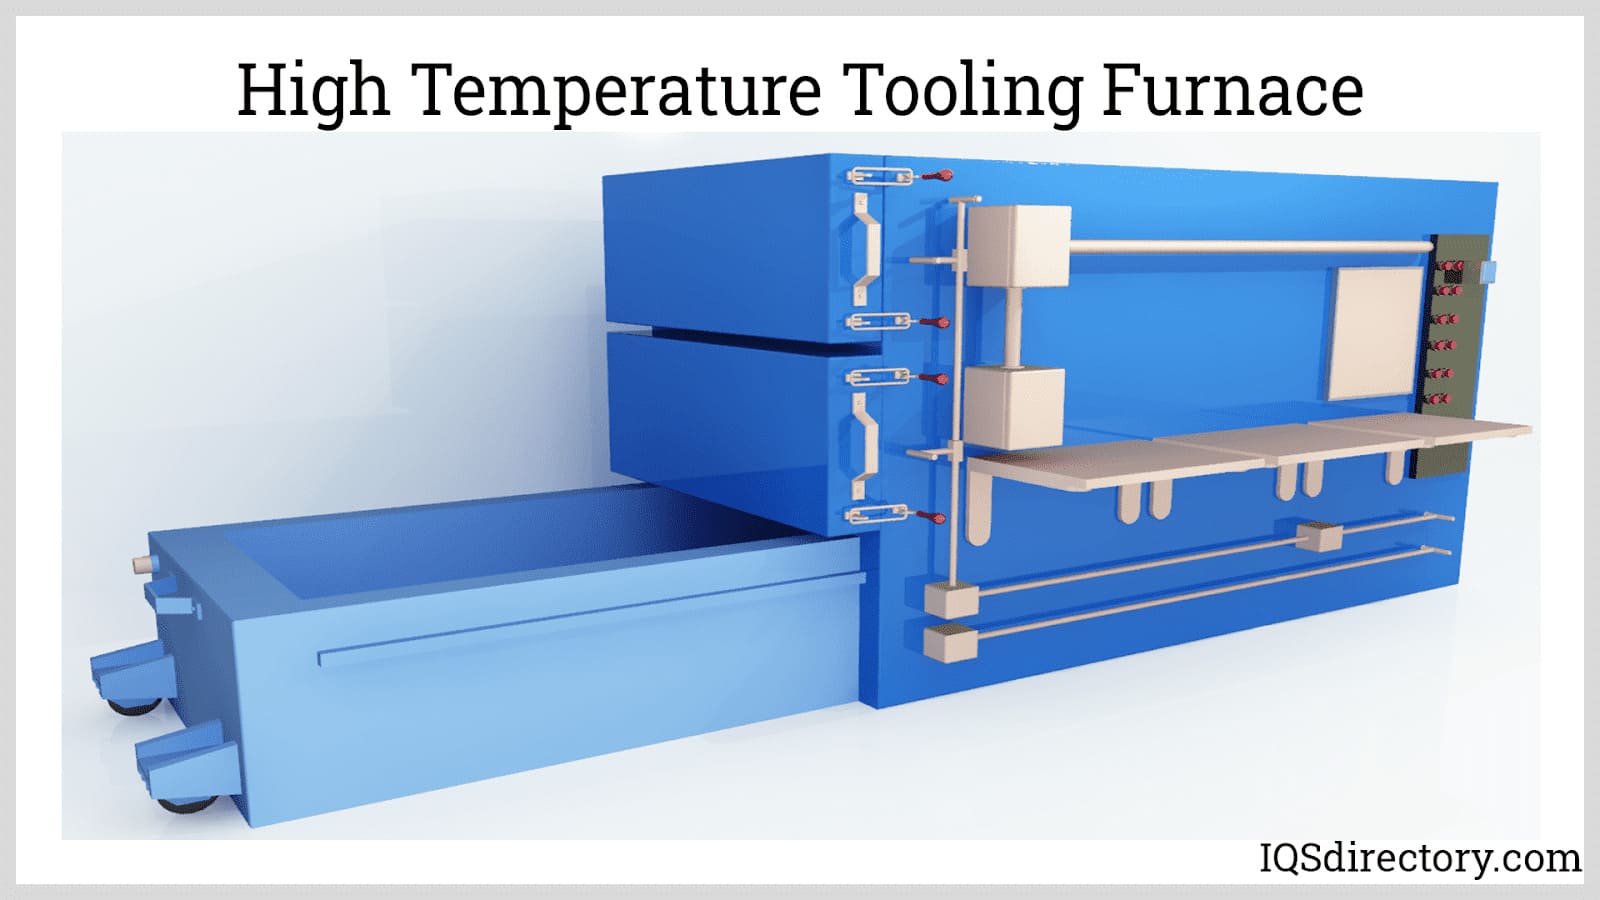 High Temperature Tooling Furnace